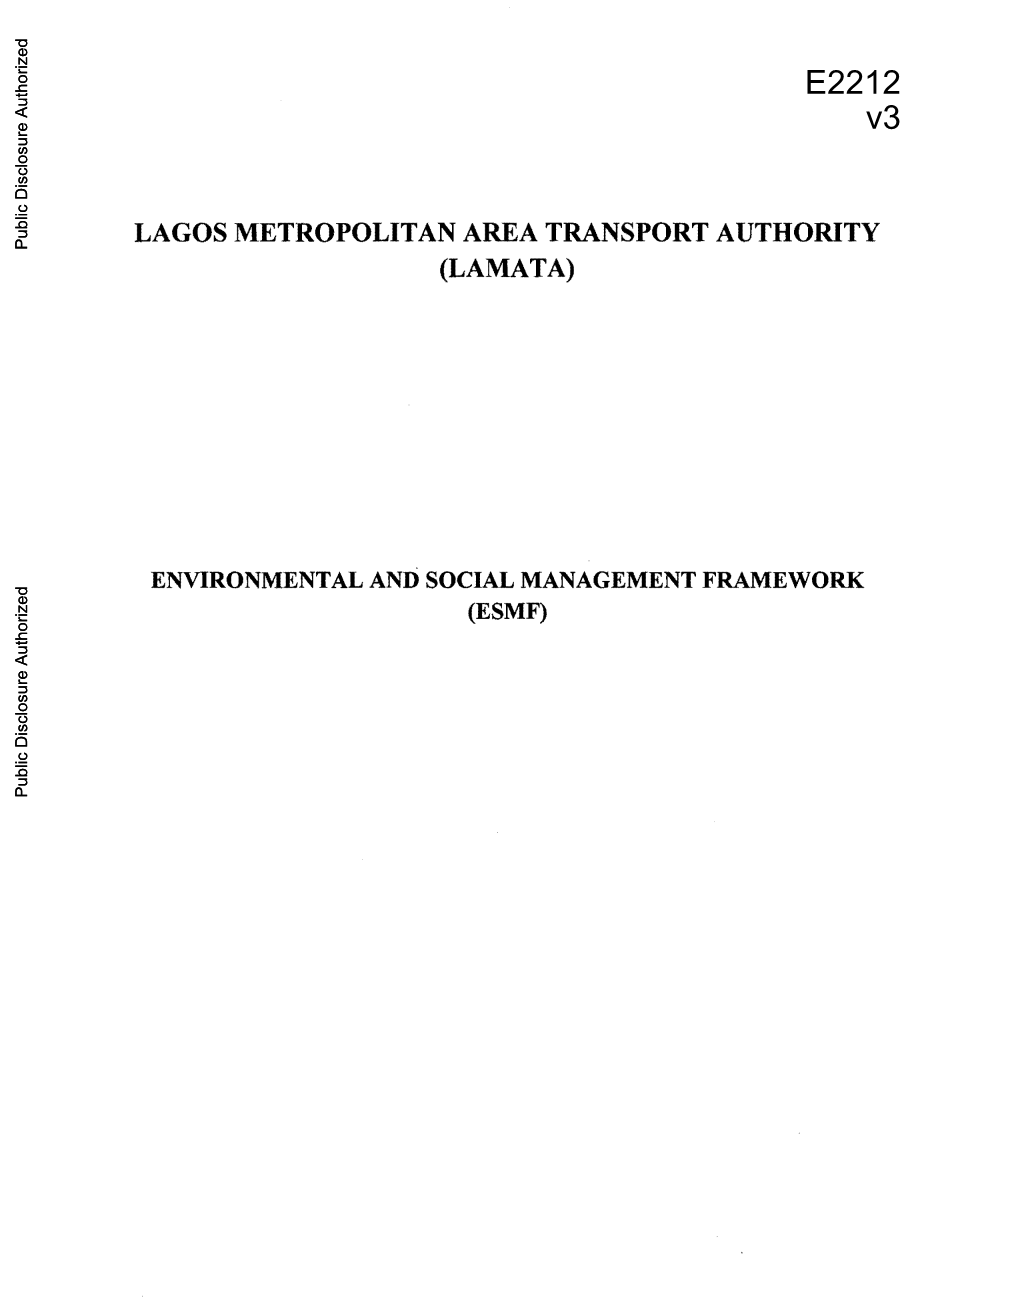 LAGOS METROPOLITAN AREA TRANSPORT AUTHORITY Public Disclosure Authorized (LAMATA) Public Disclosure Authorized